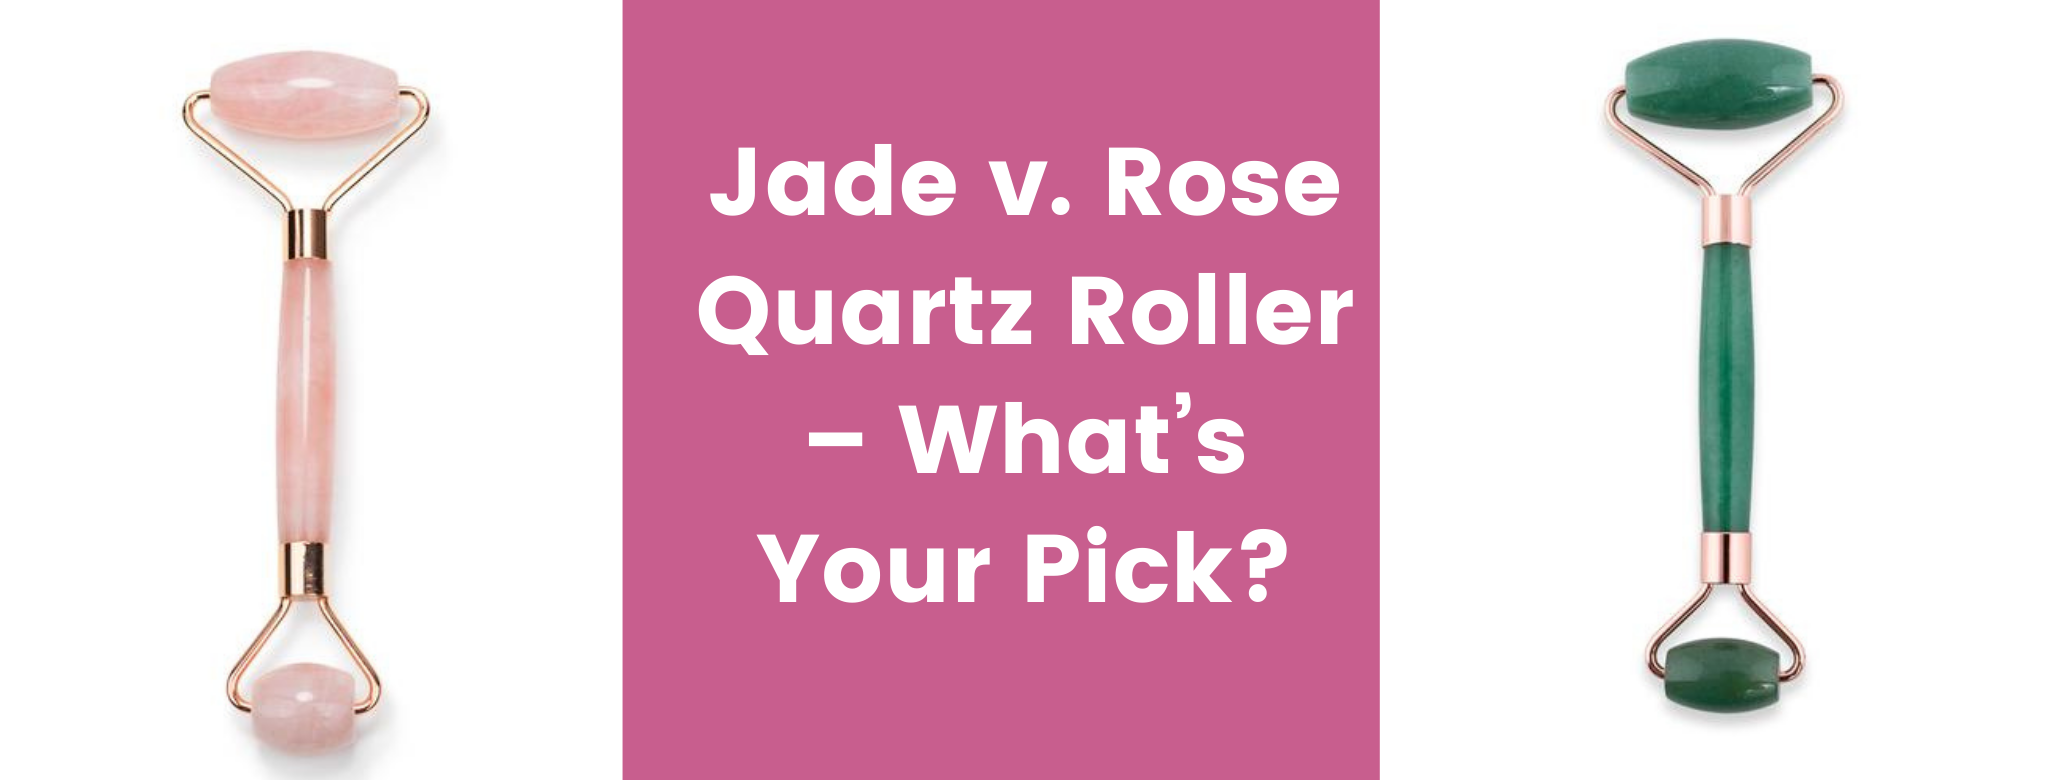 Jade v. Rose Quartz Roller – What’s Your Pick?